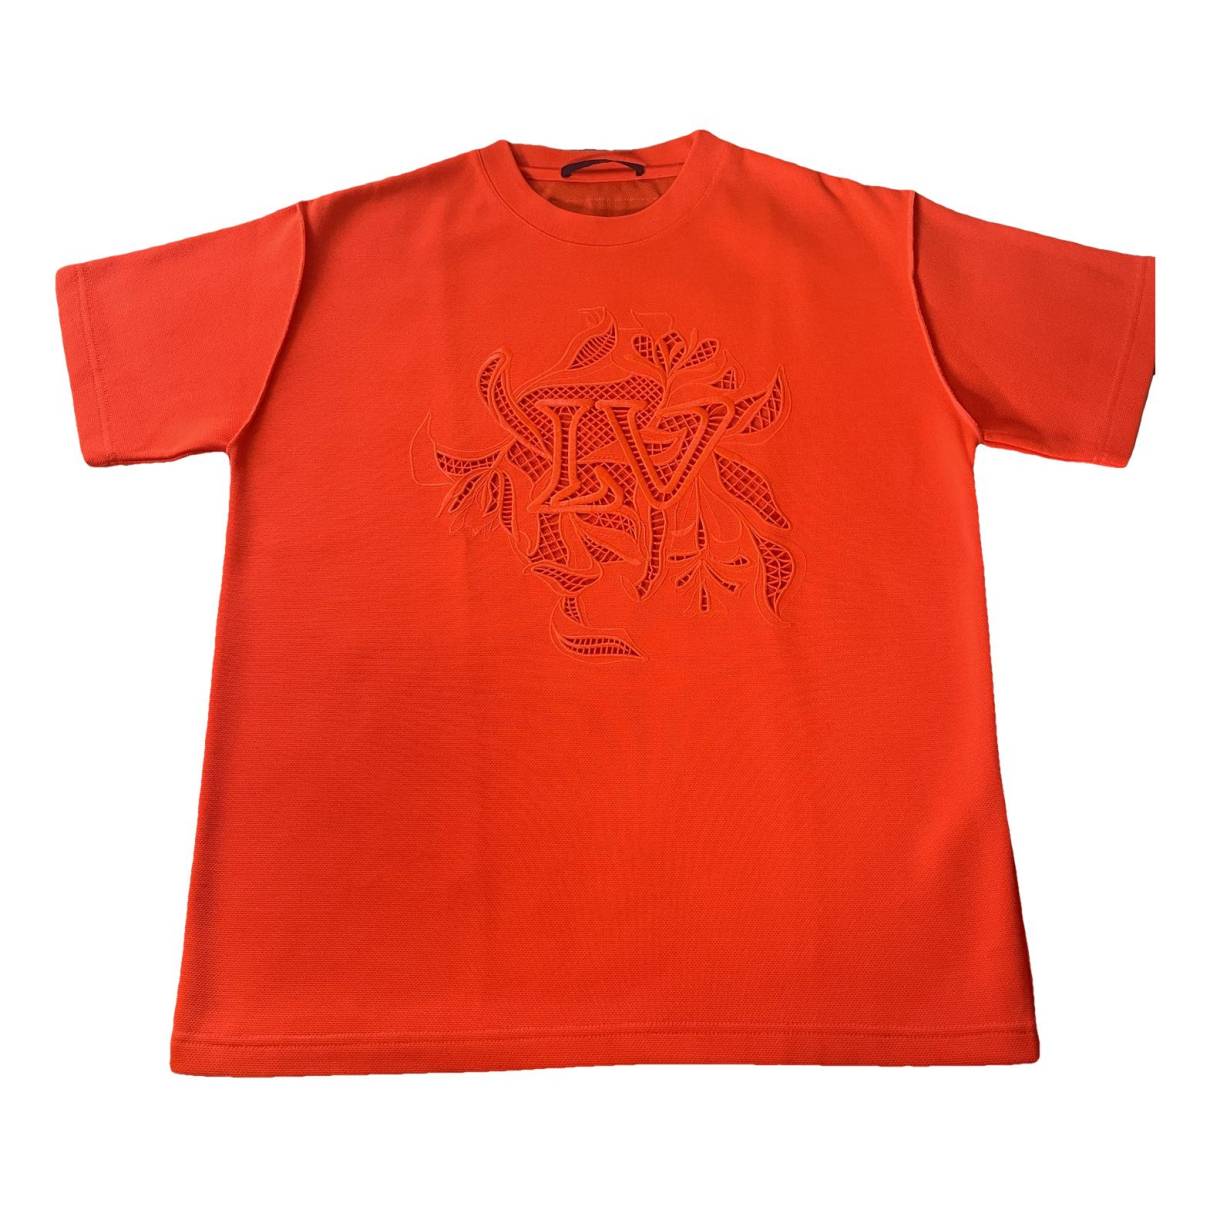 T-shirt Louis Vuitton Orange size S International in Polyester